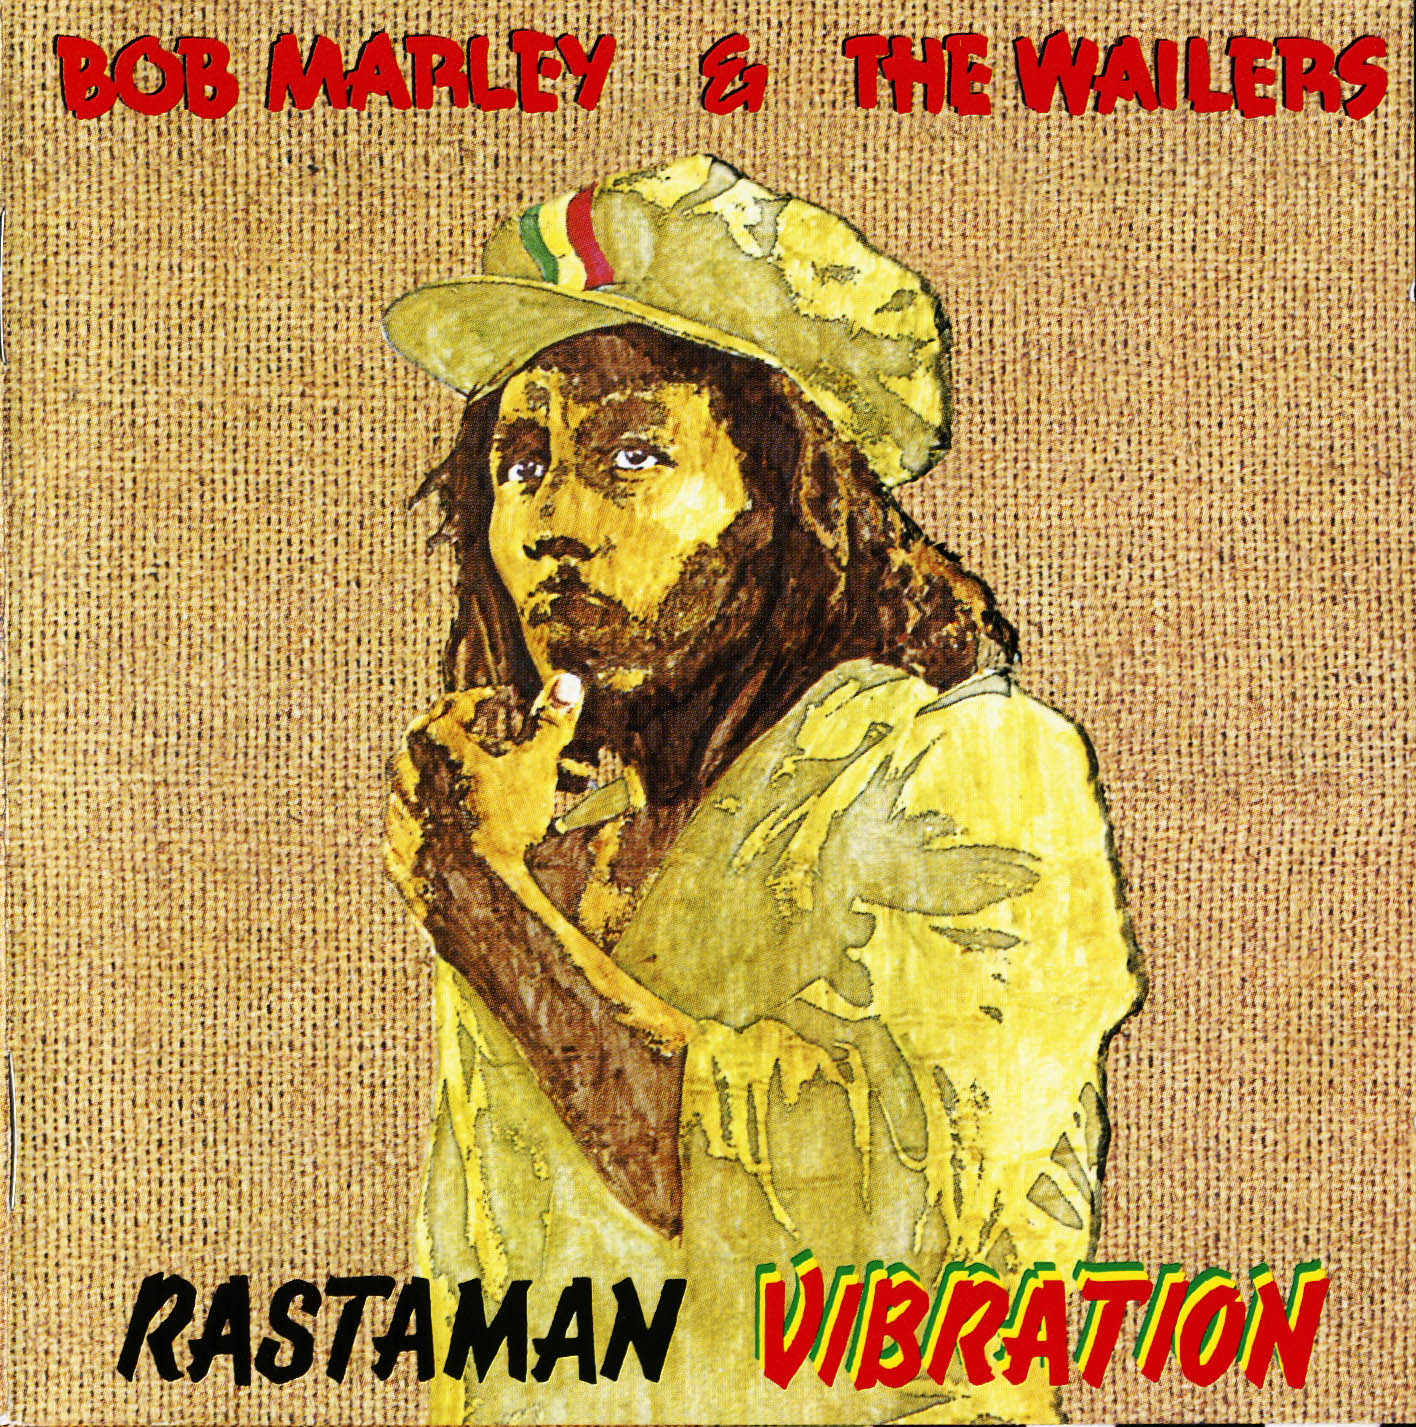 Missing Hits 7 : Bob Marley - (1976) Rastaman Vibration (Deluxe Edition)1416 x 1427